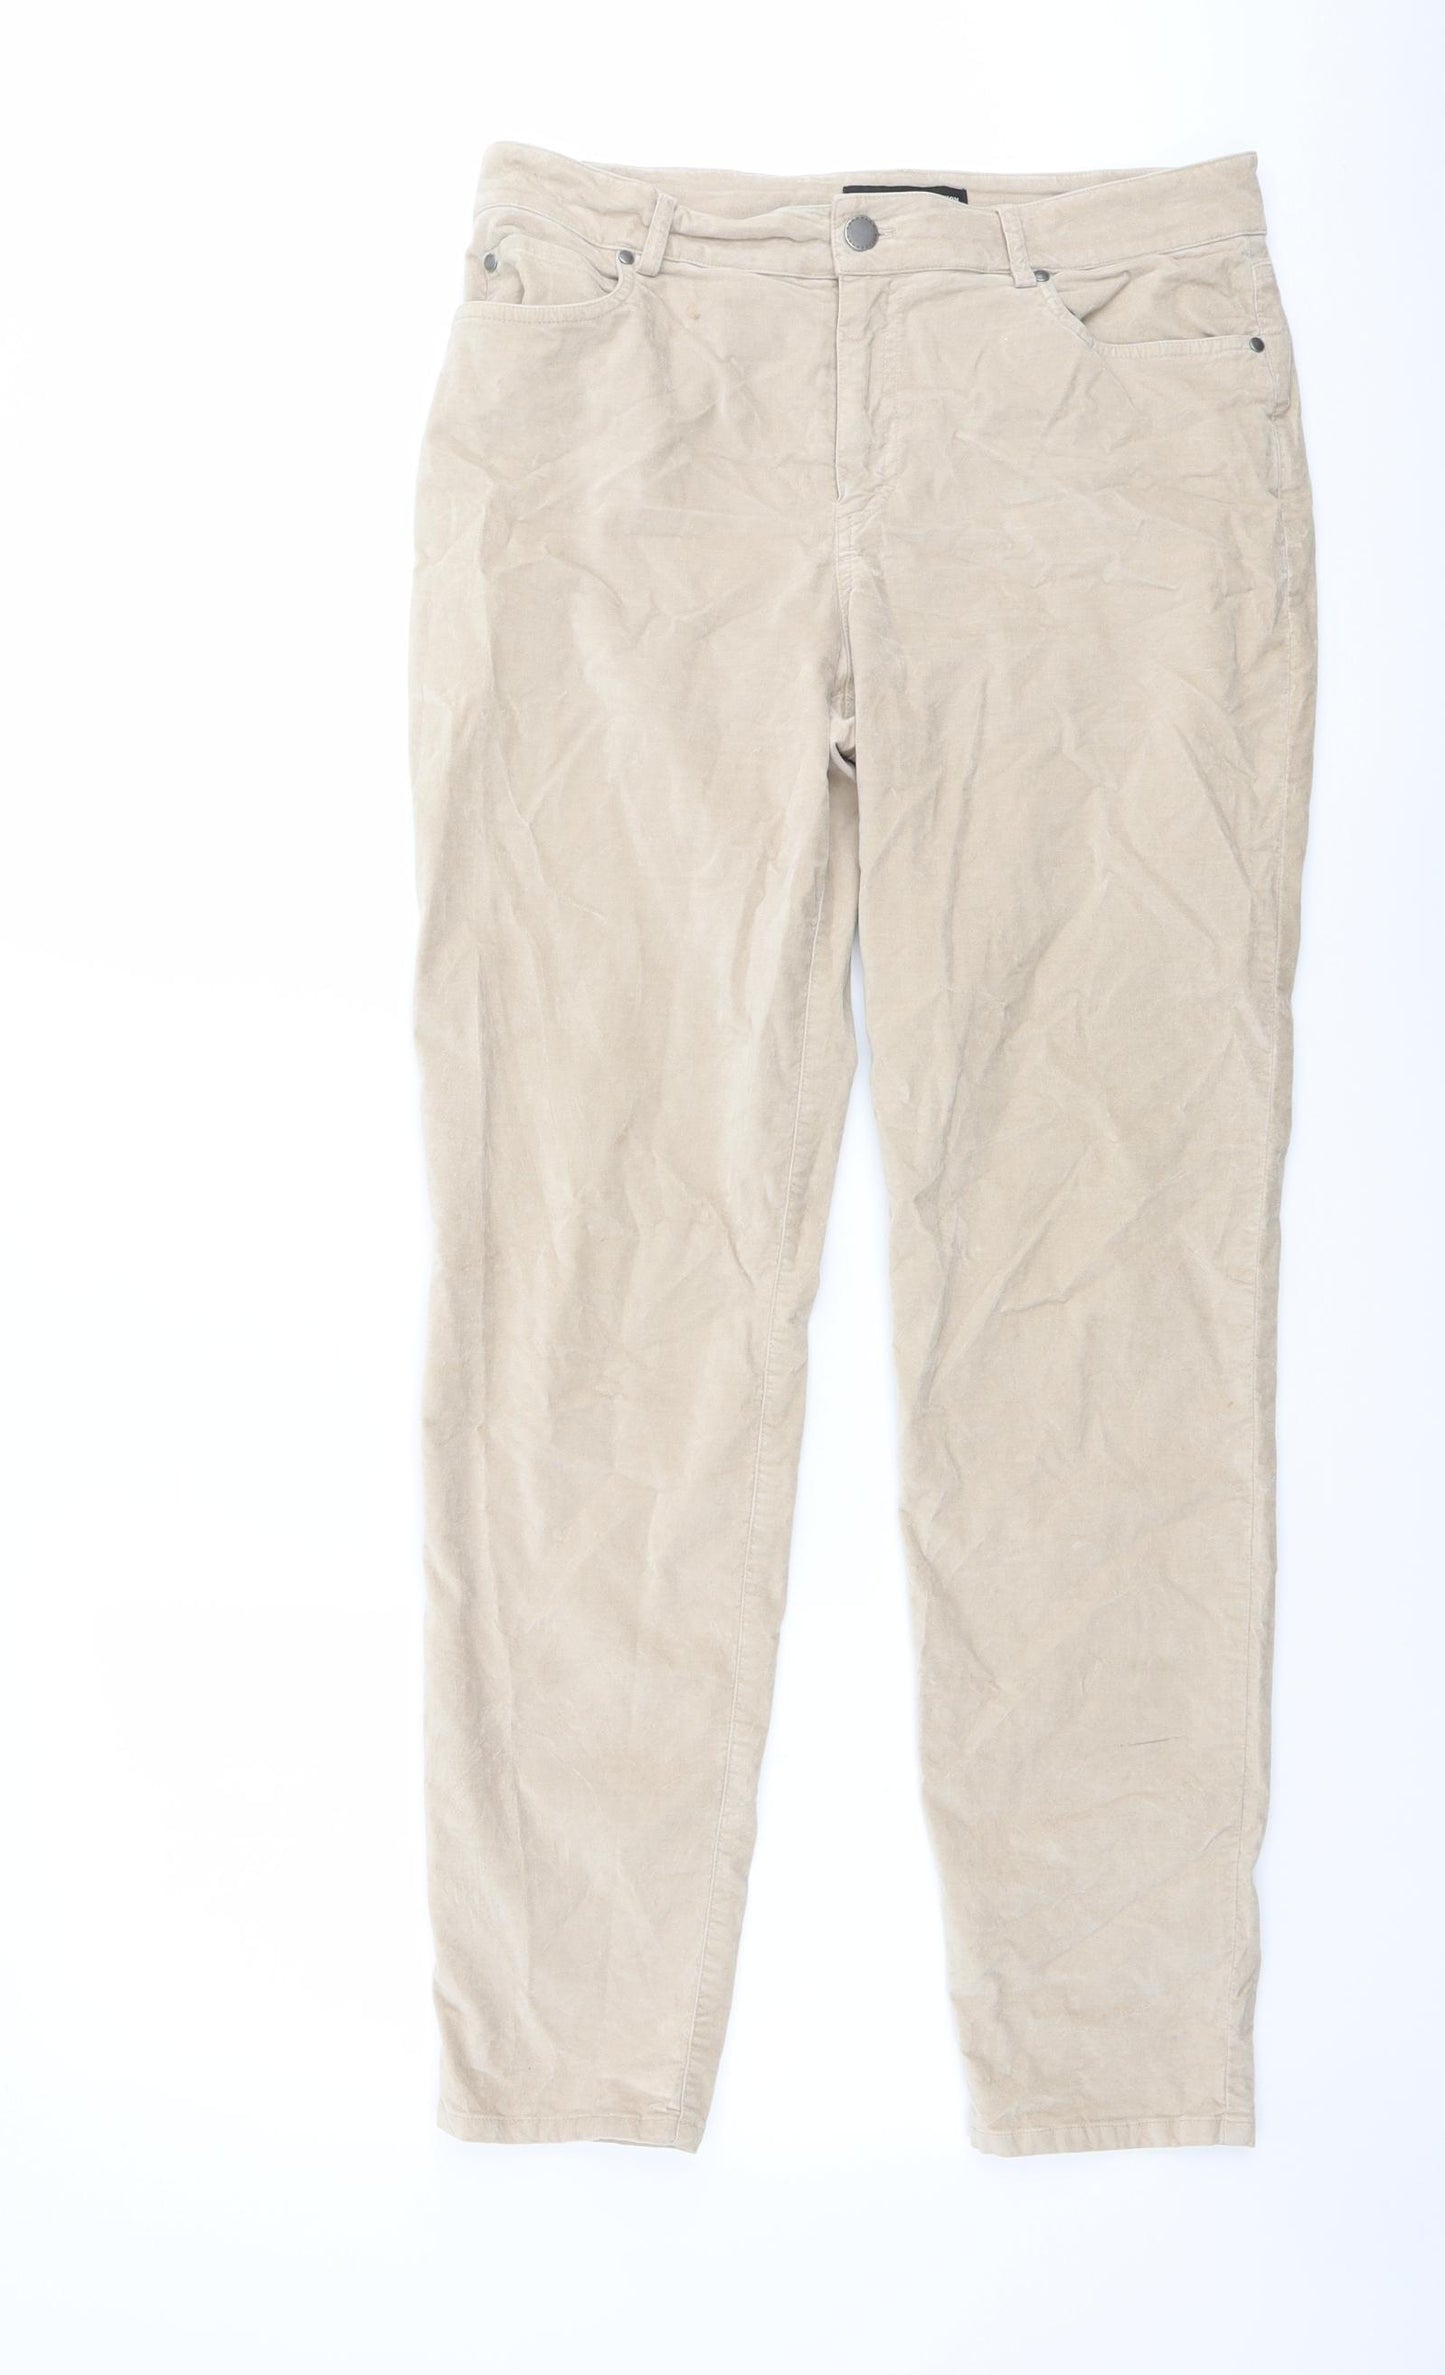 Peruvian Connection Womens Beige Herringbone Cotton Trousers Size 14 L30 in Regular Button